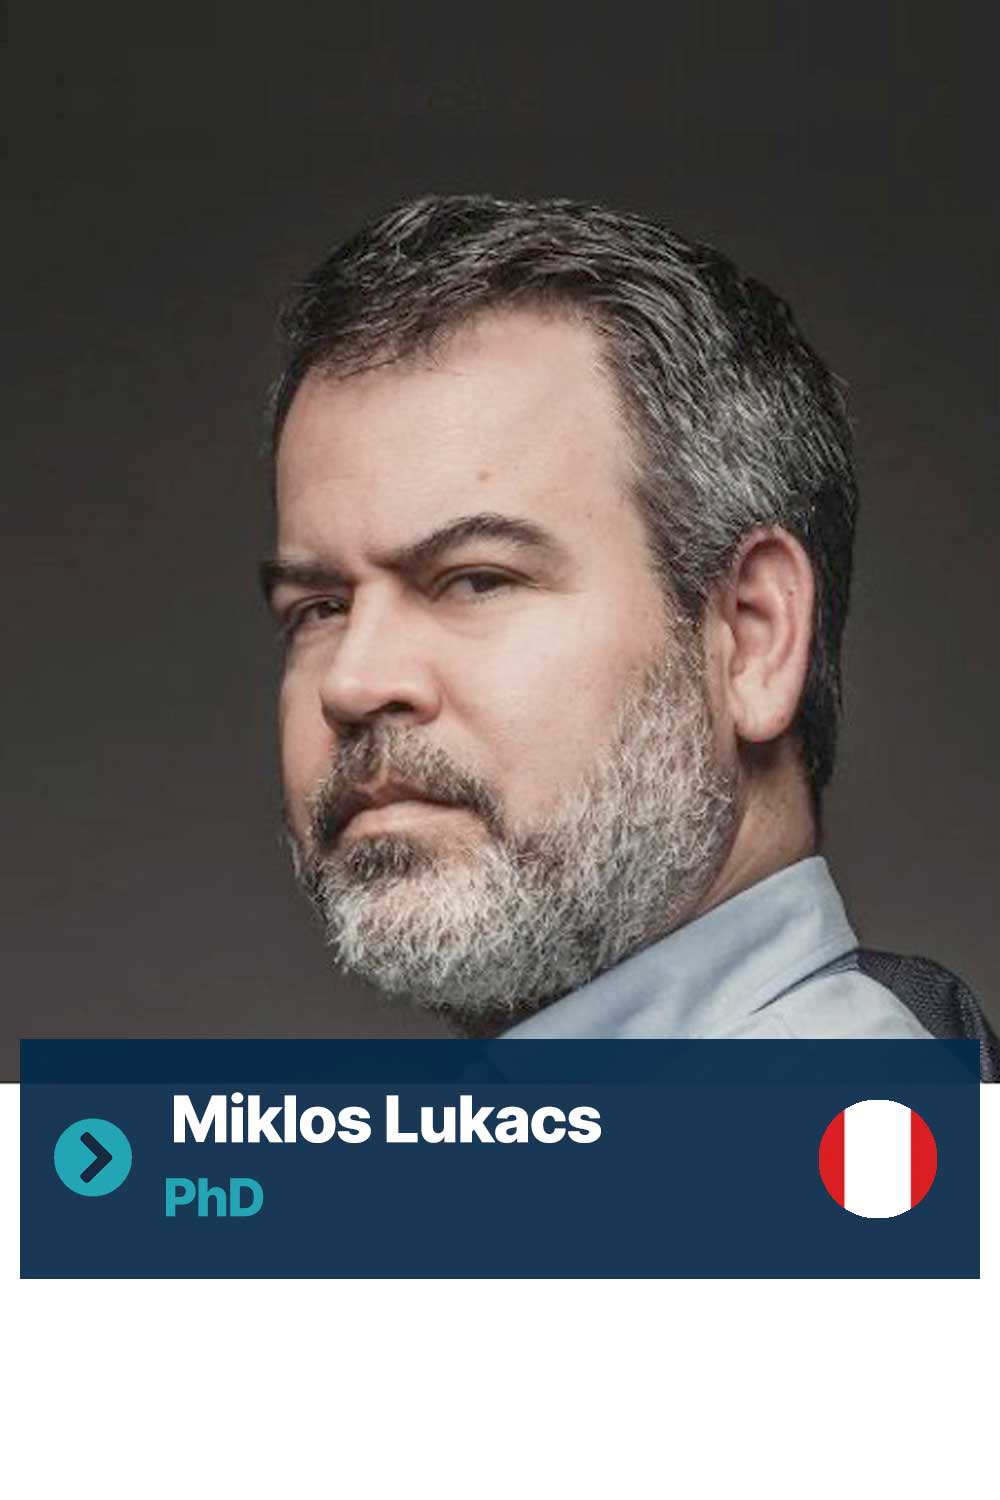 Miklos Lukacs